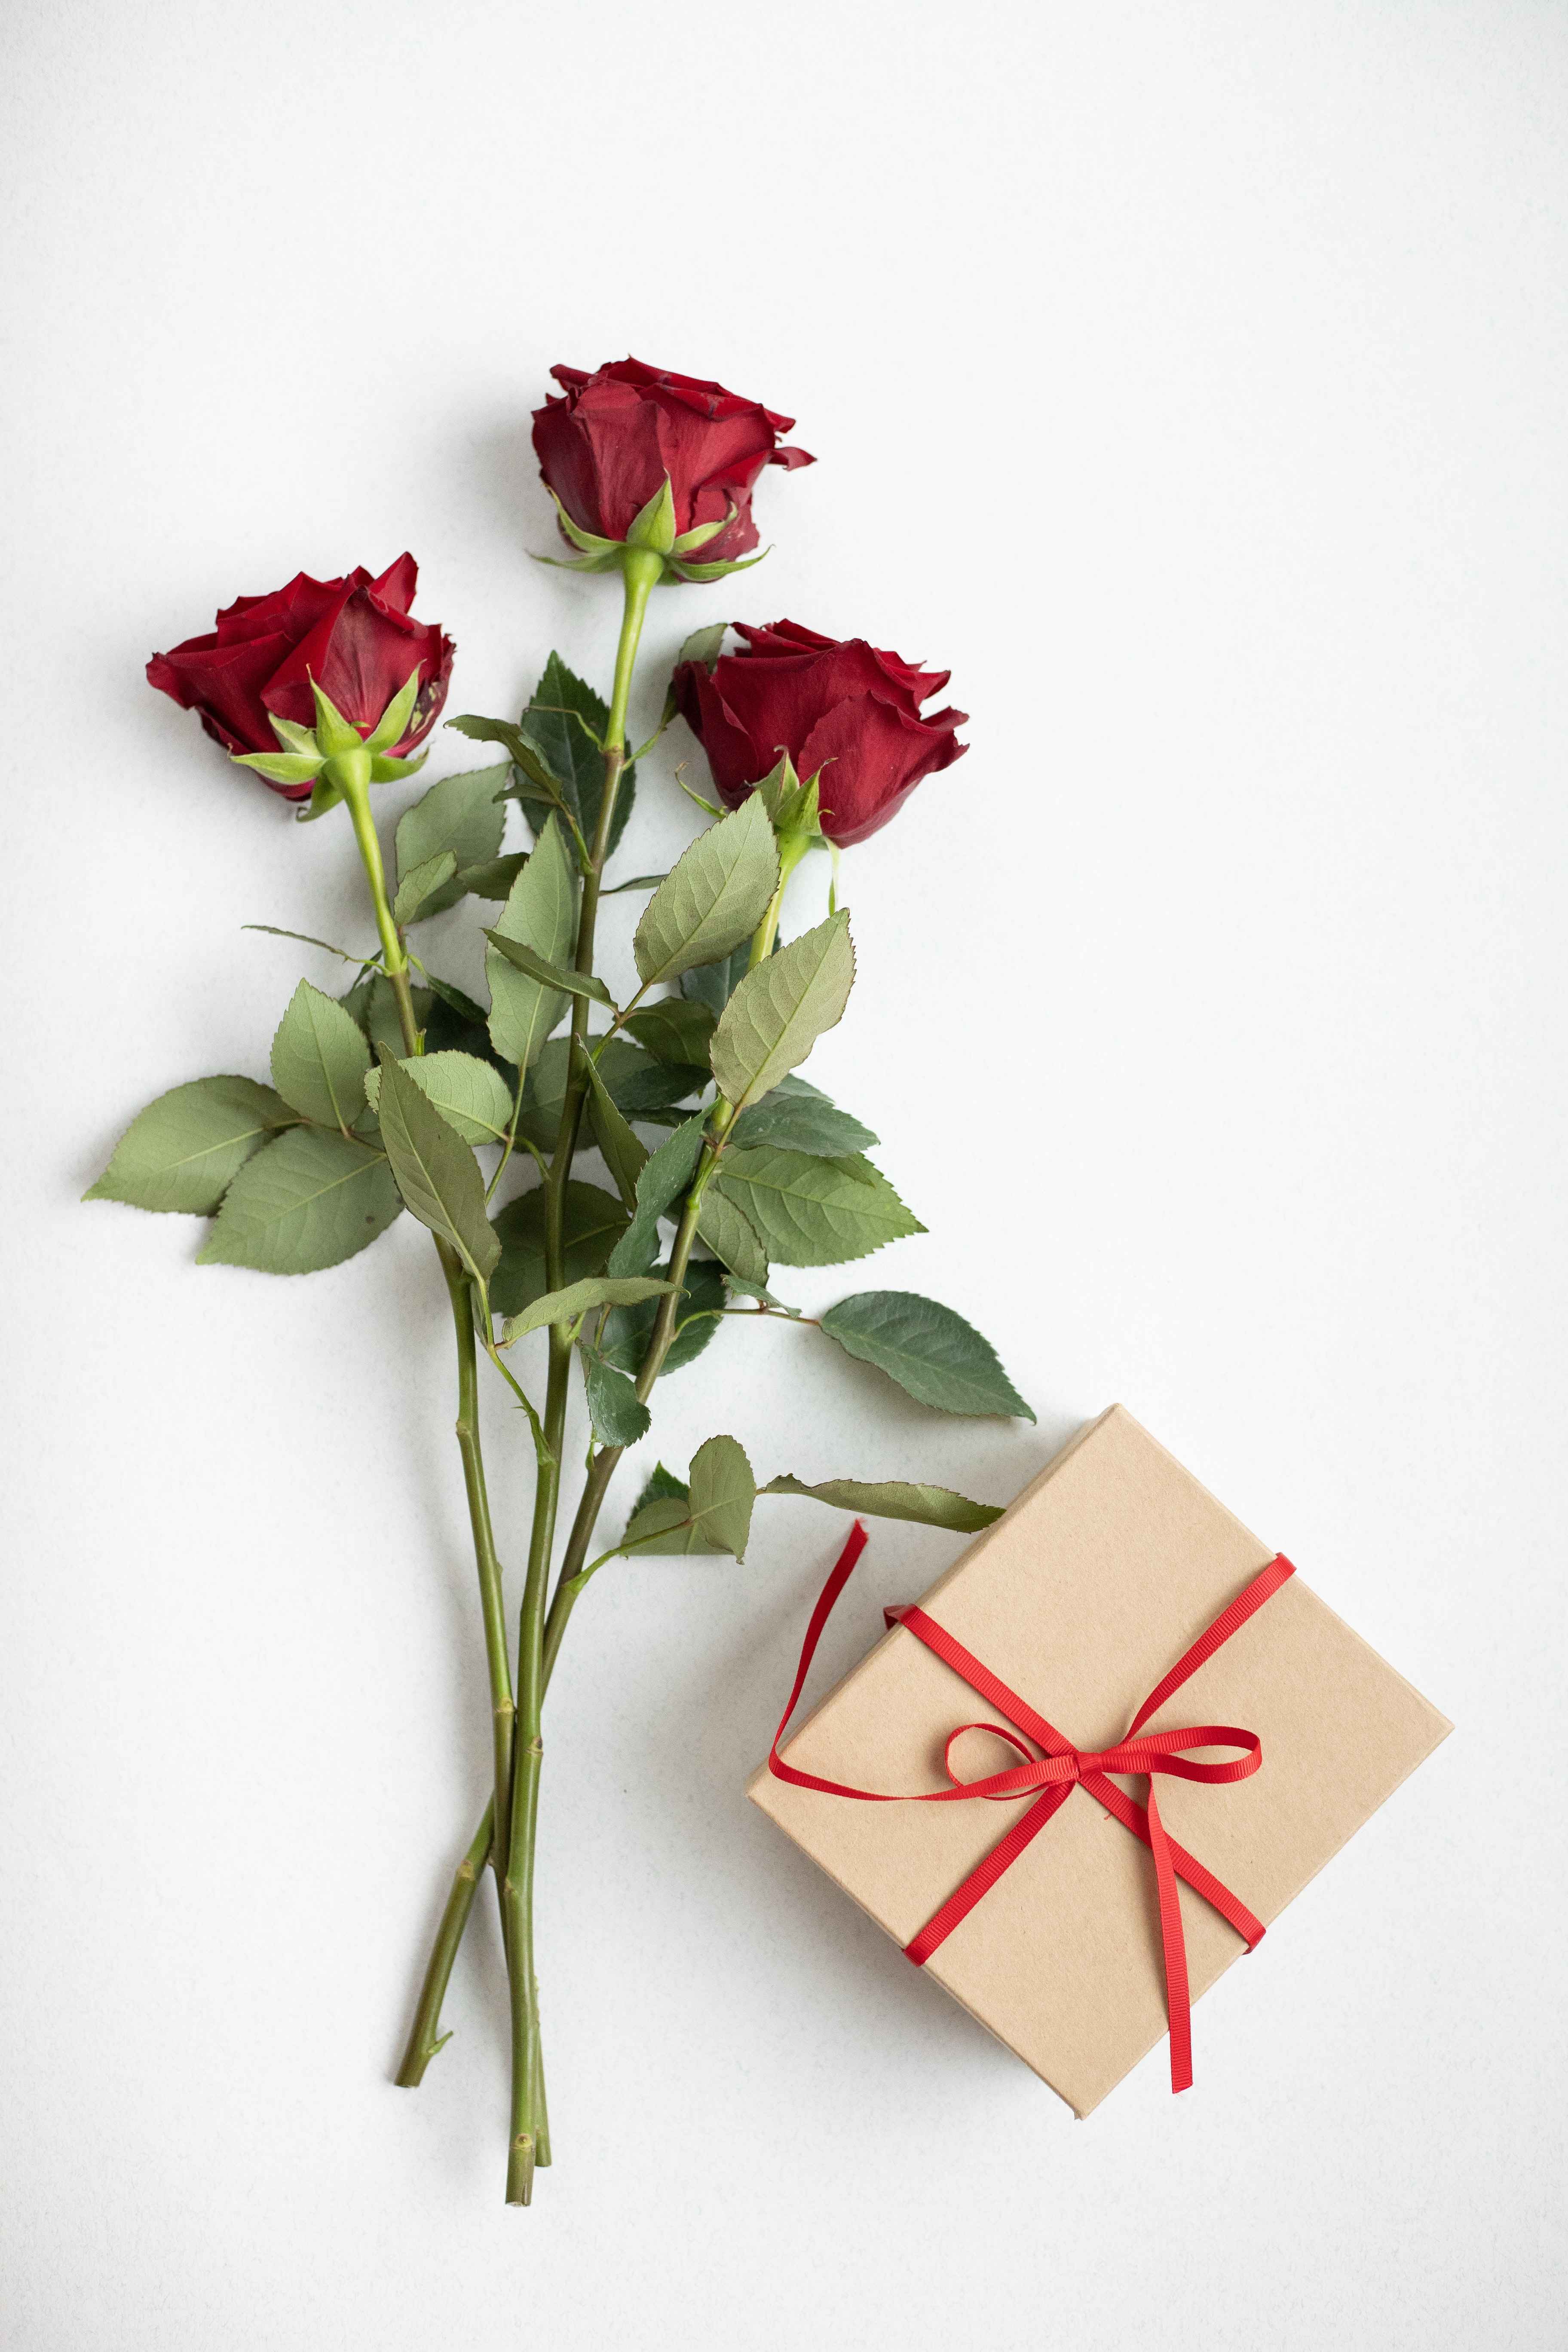 Bunga mawar merah melambangkan rasa cinta dan kasih sayang